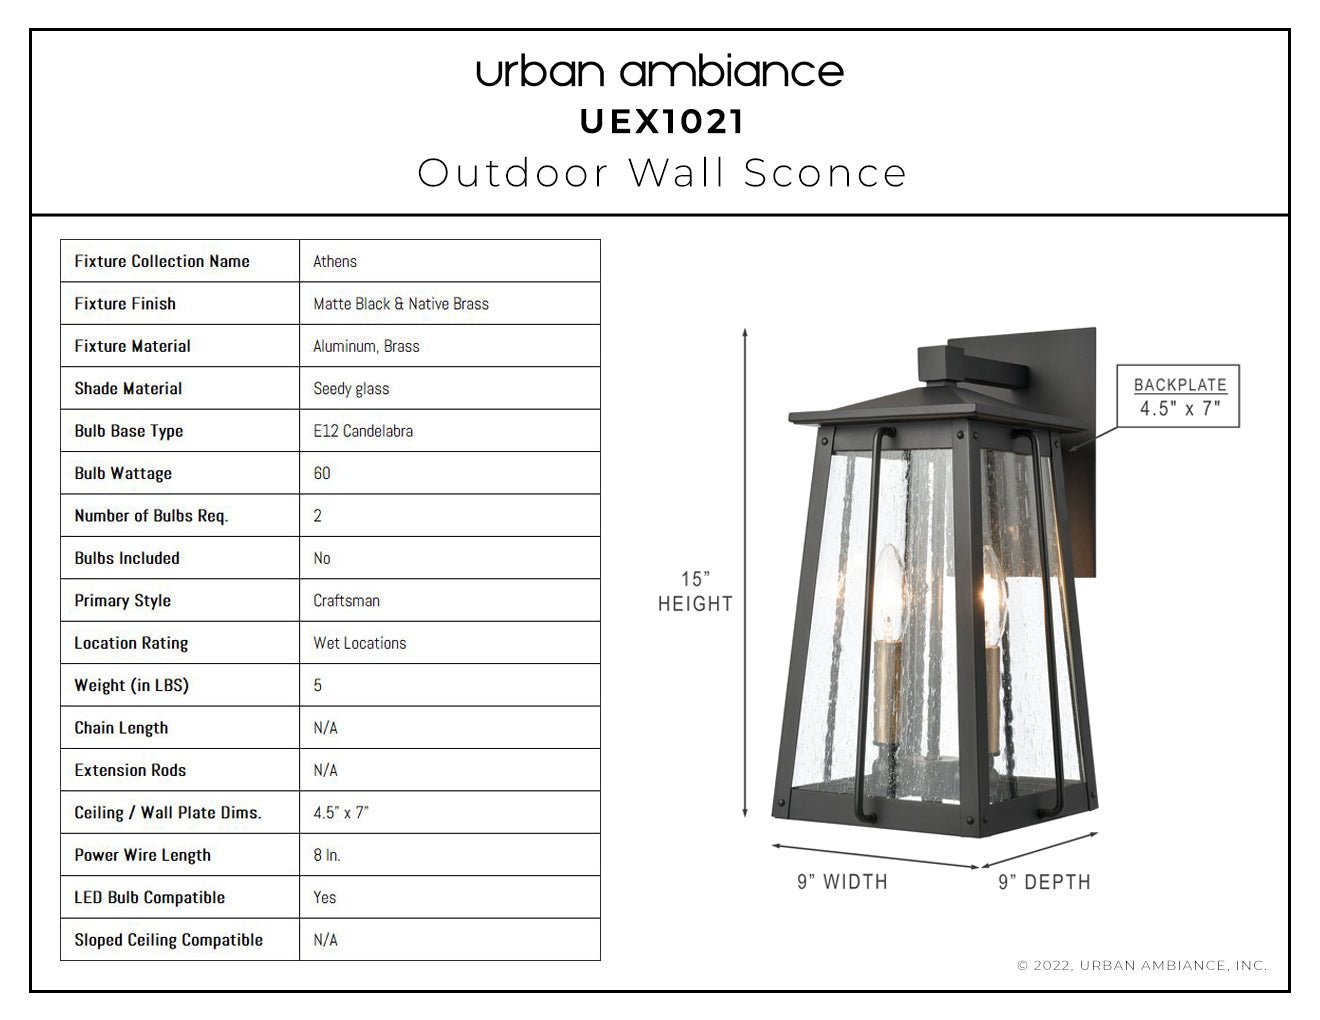 LNC Craftsman 1-Light Matte Black Outdoor Wall Lantern Sconce with